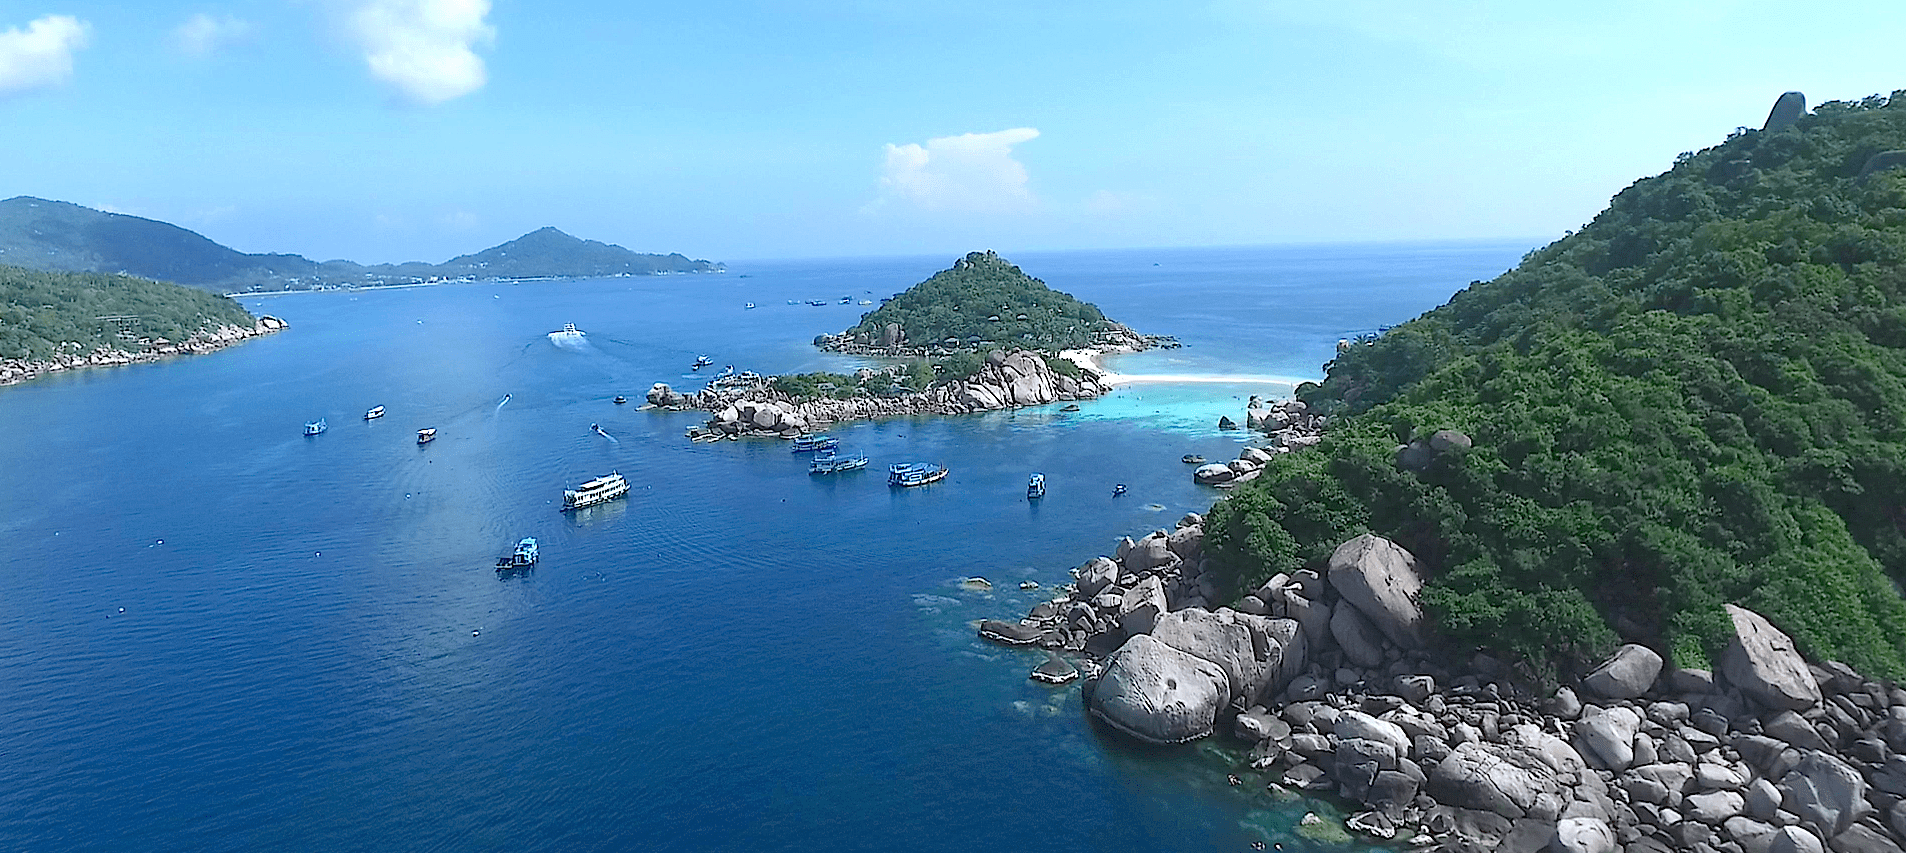 crystaldive.com koh tao koh nangyuan island dive sites